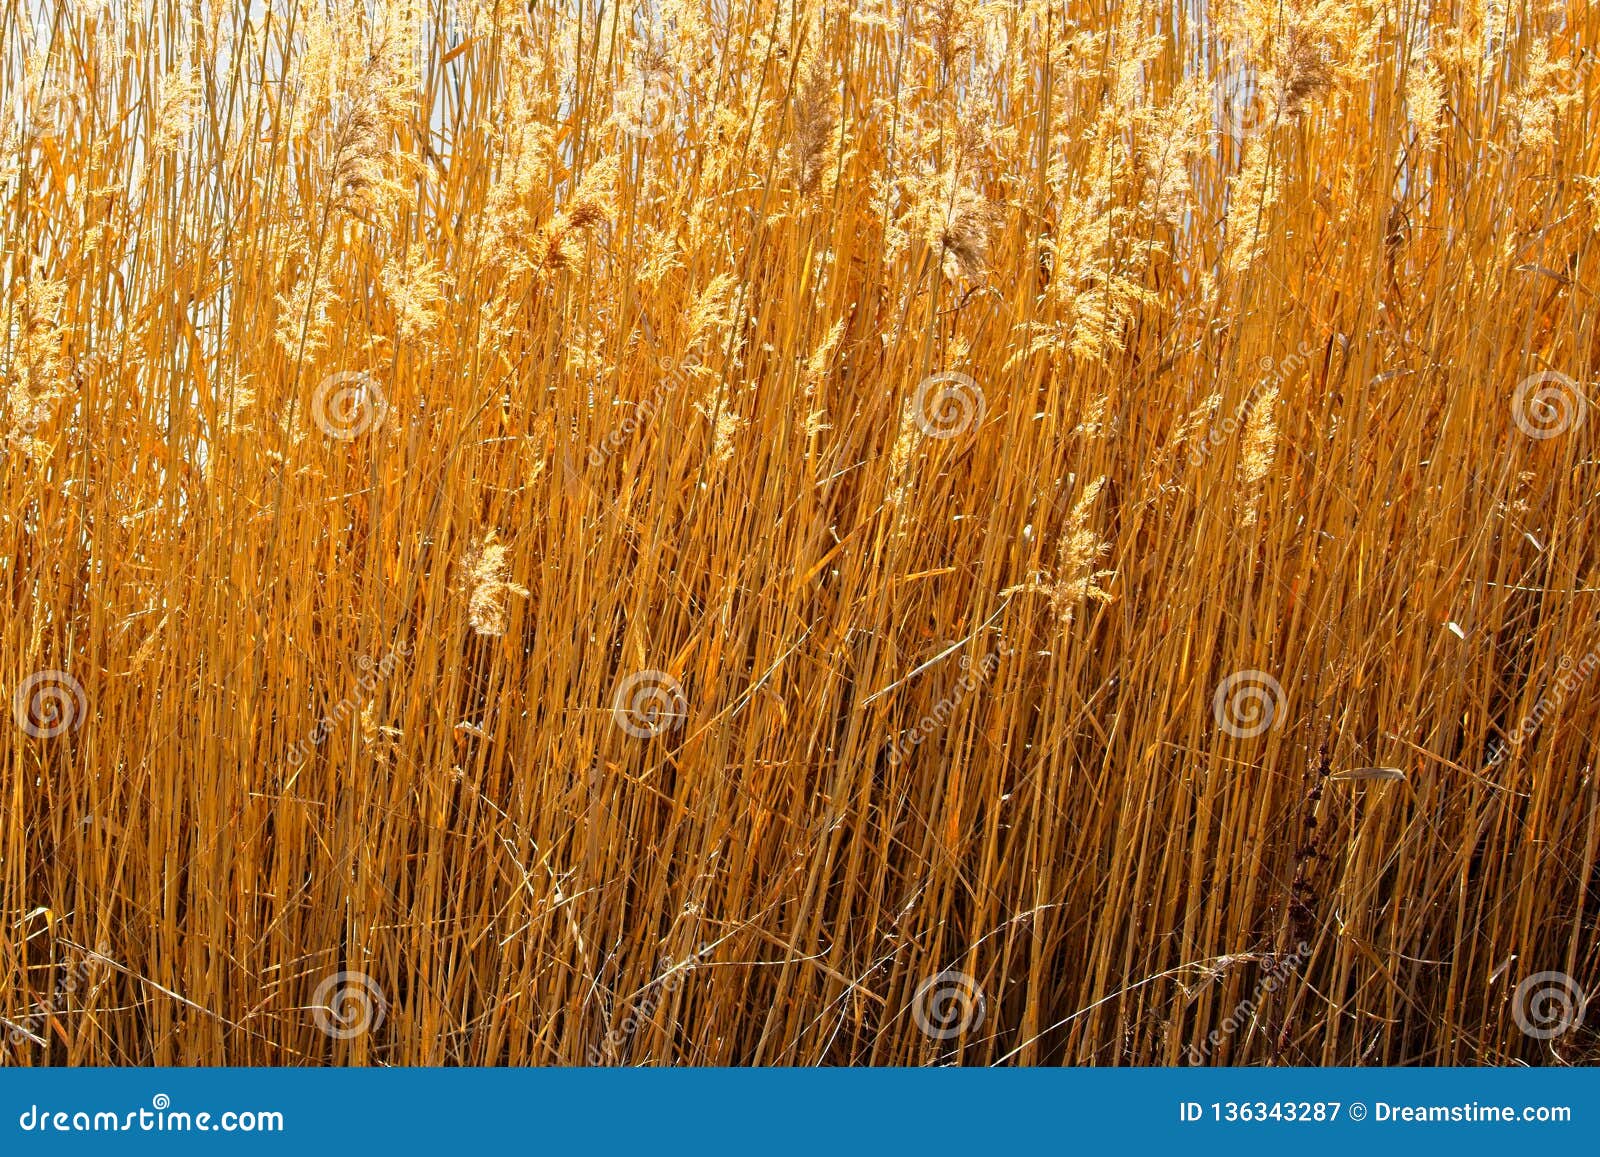 Golden Grasses Windswept in the Sun Stock Image - Image of season